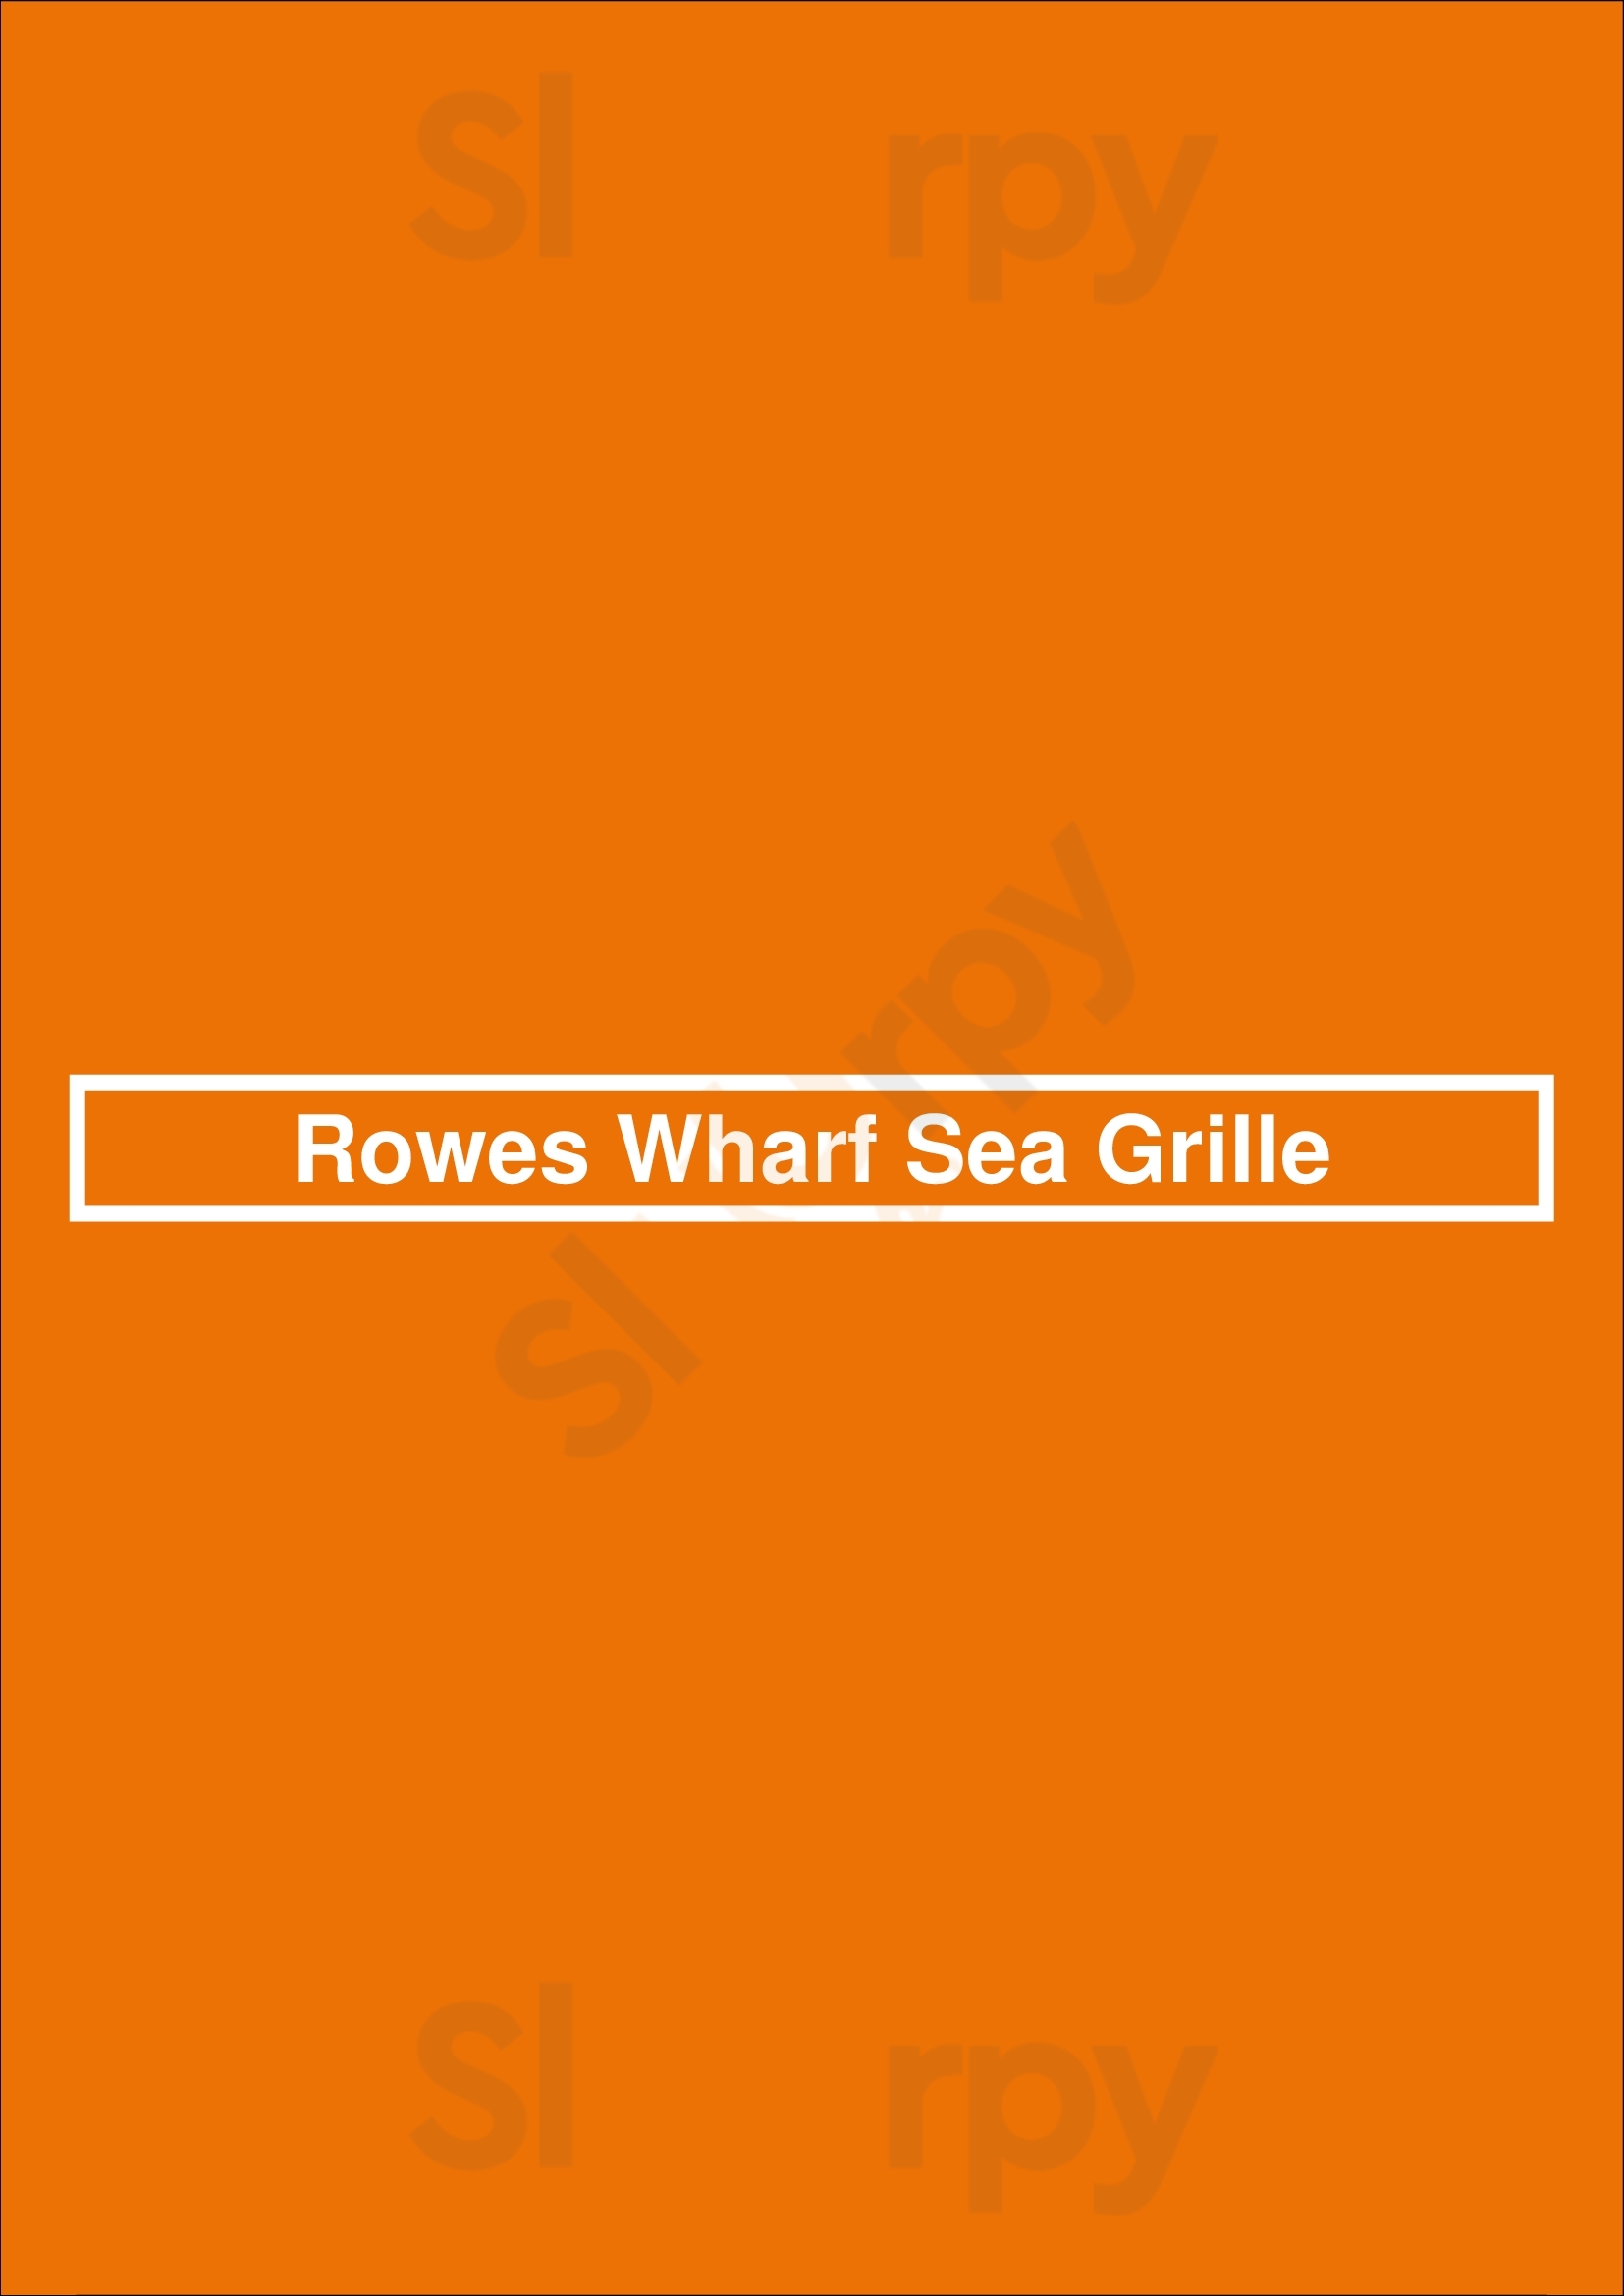 Rowes Wharf Sea Grille Boston Menu - 1